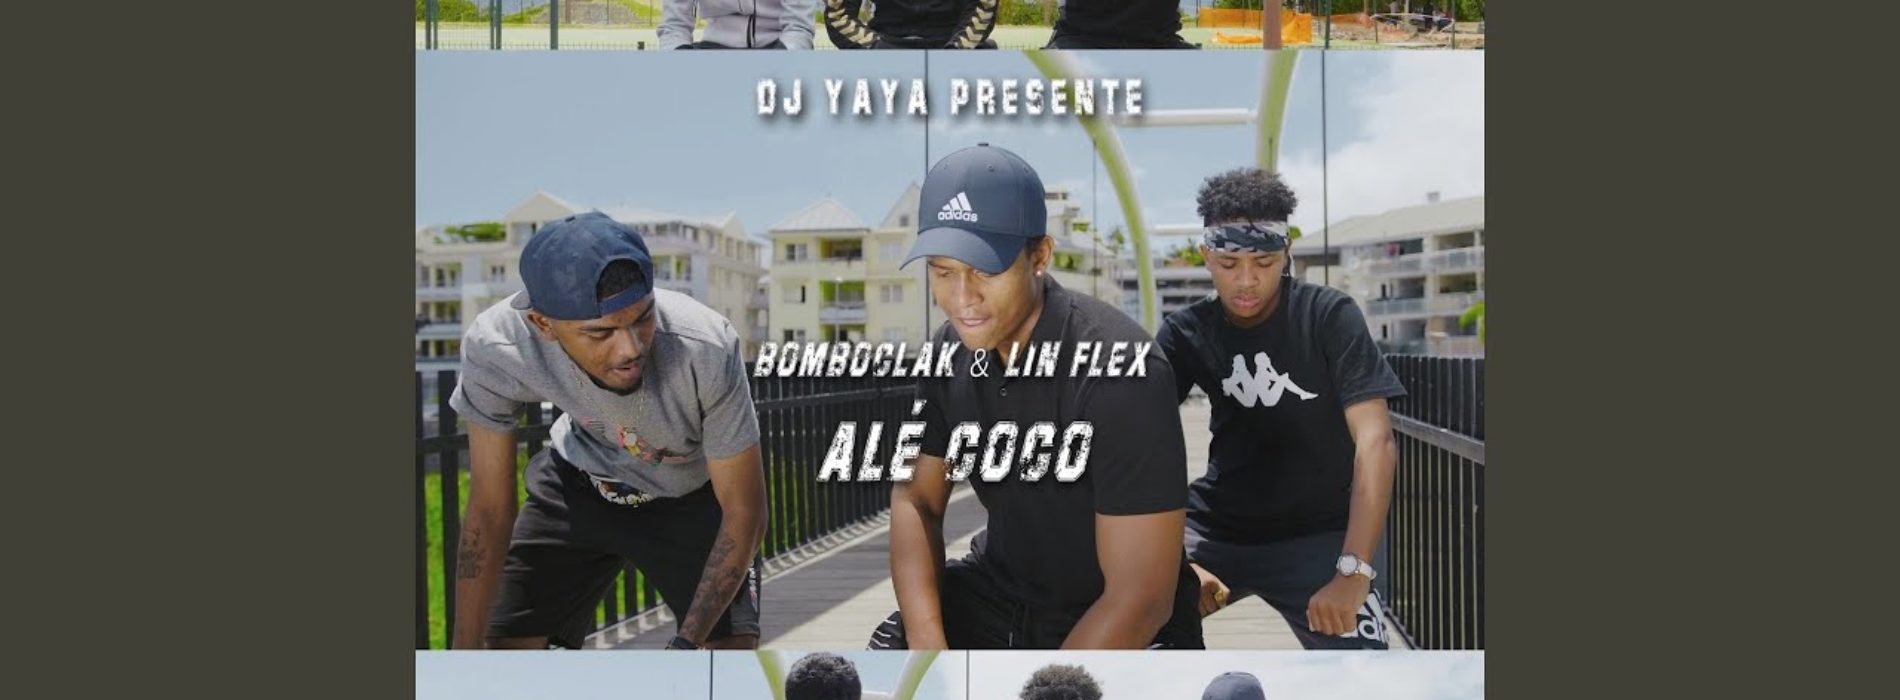 Dj Yaya Feat Lin Flex & Bomboclak – Alé Coco – Clip Officiel – Juin 2020